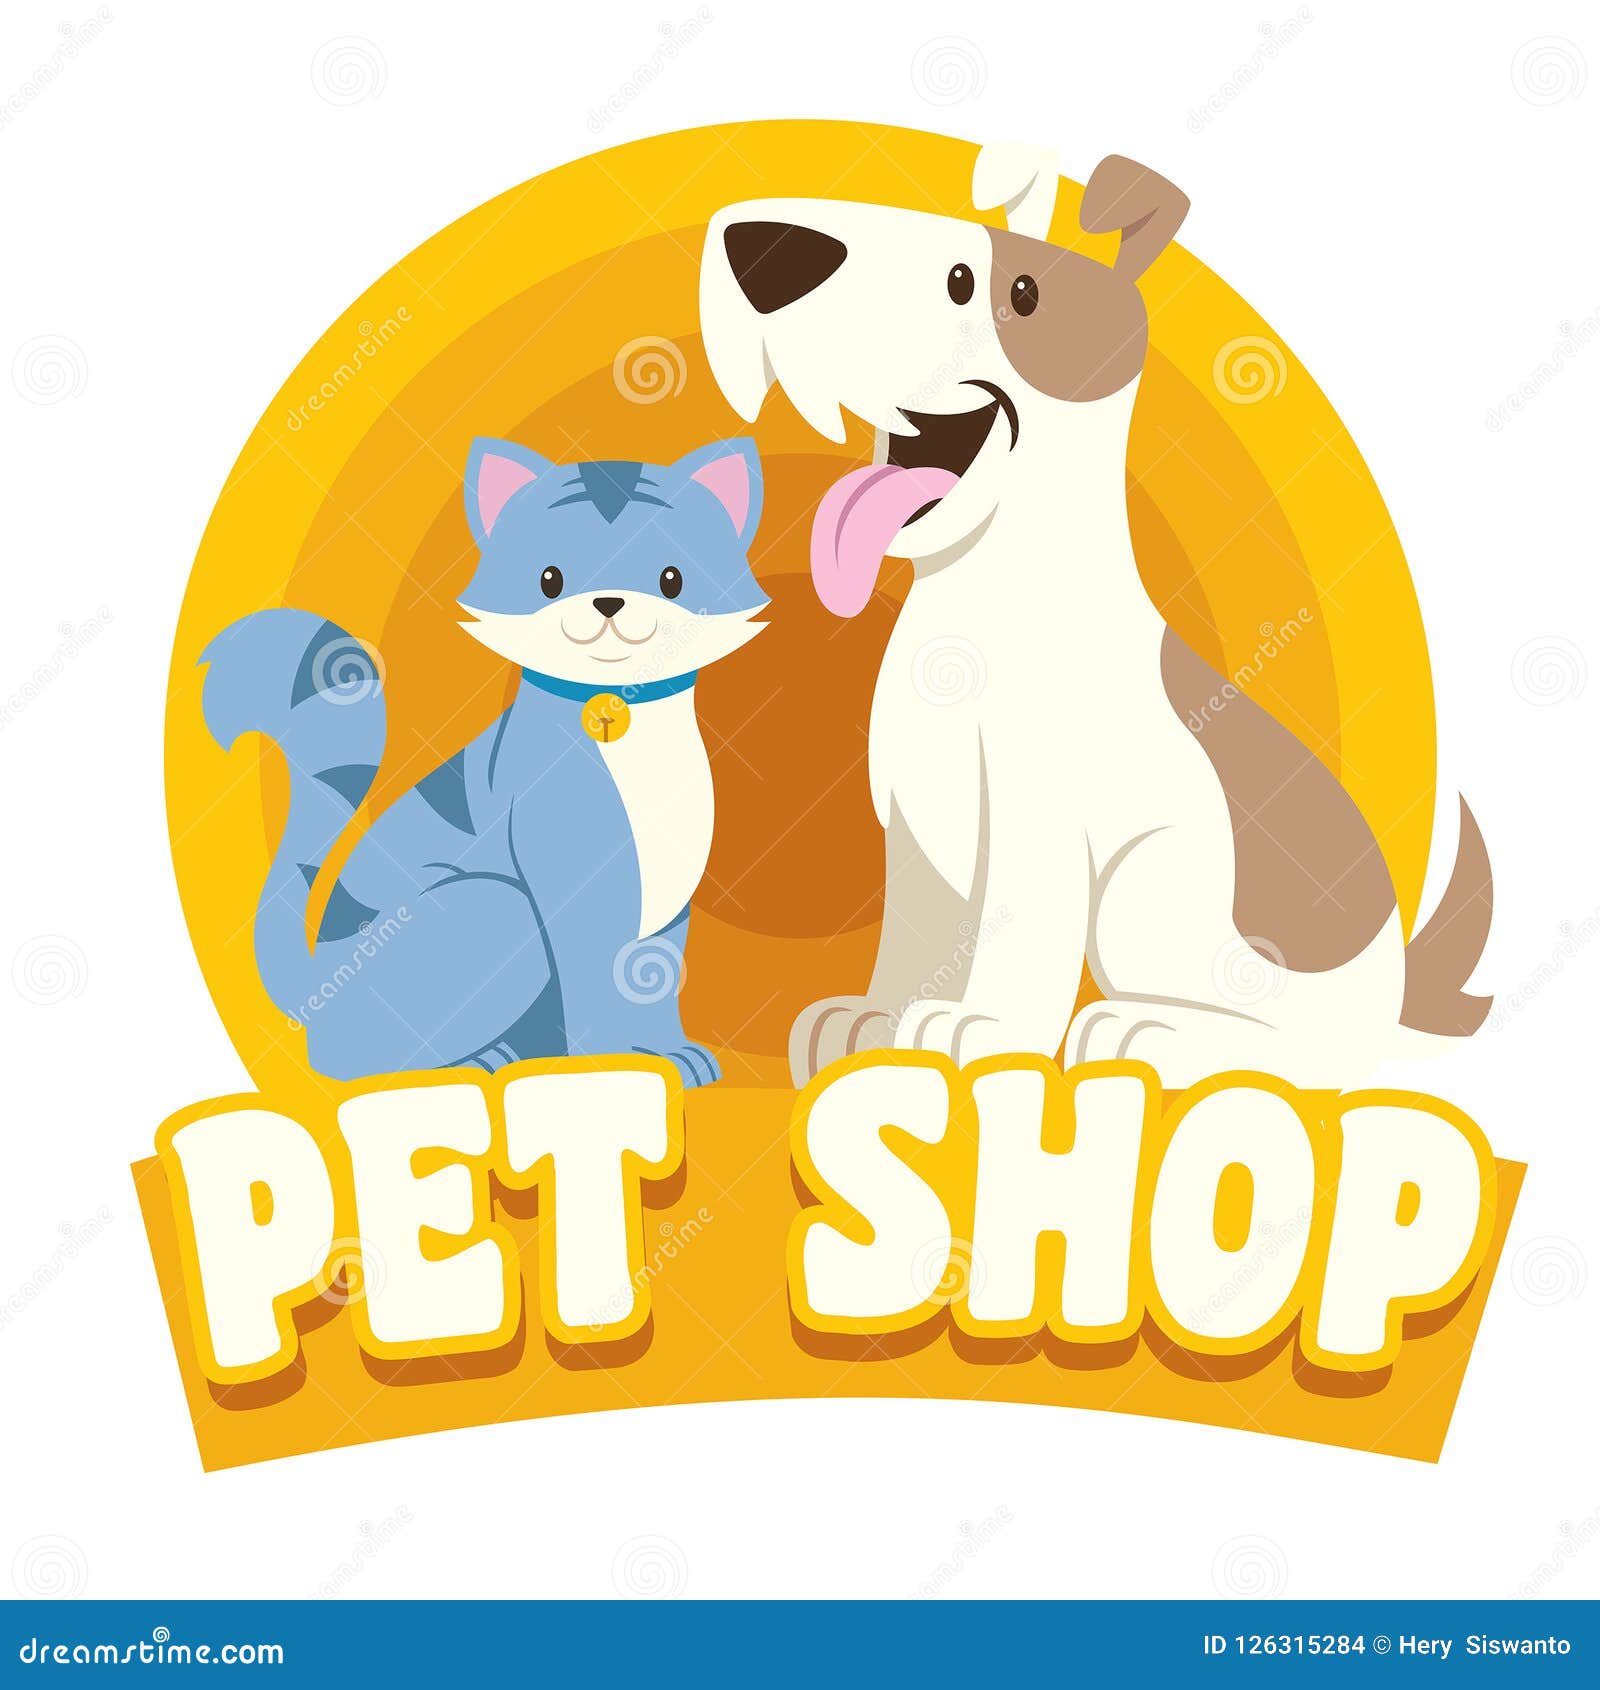 cat & dog petshop 